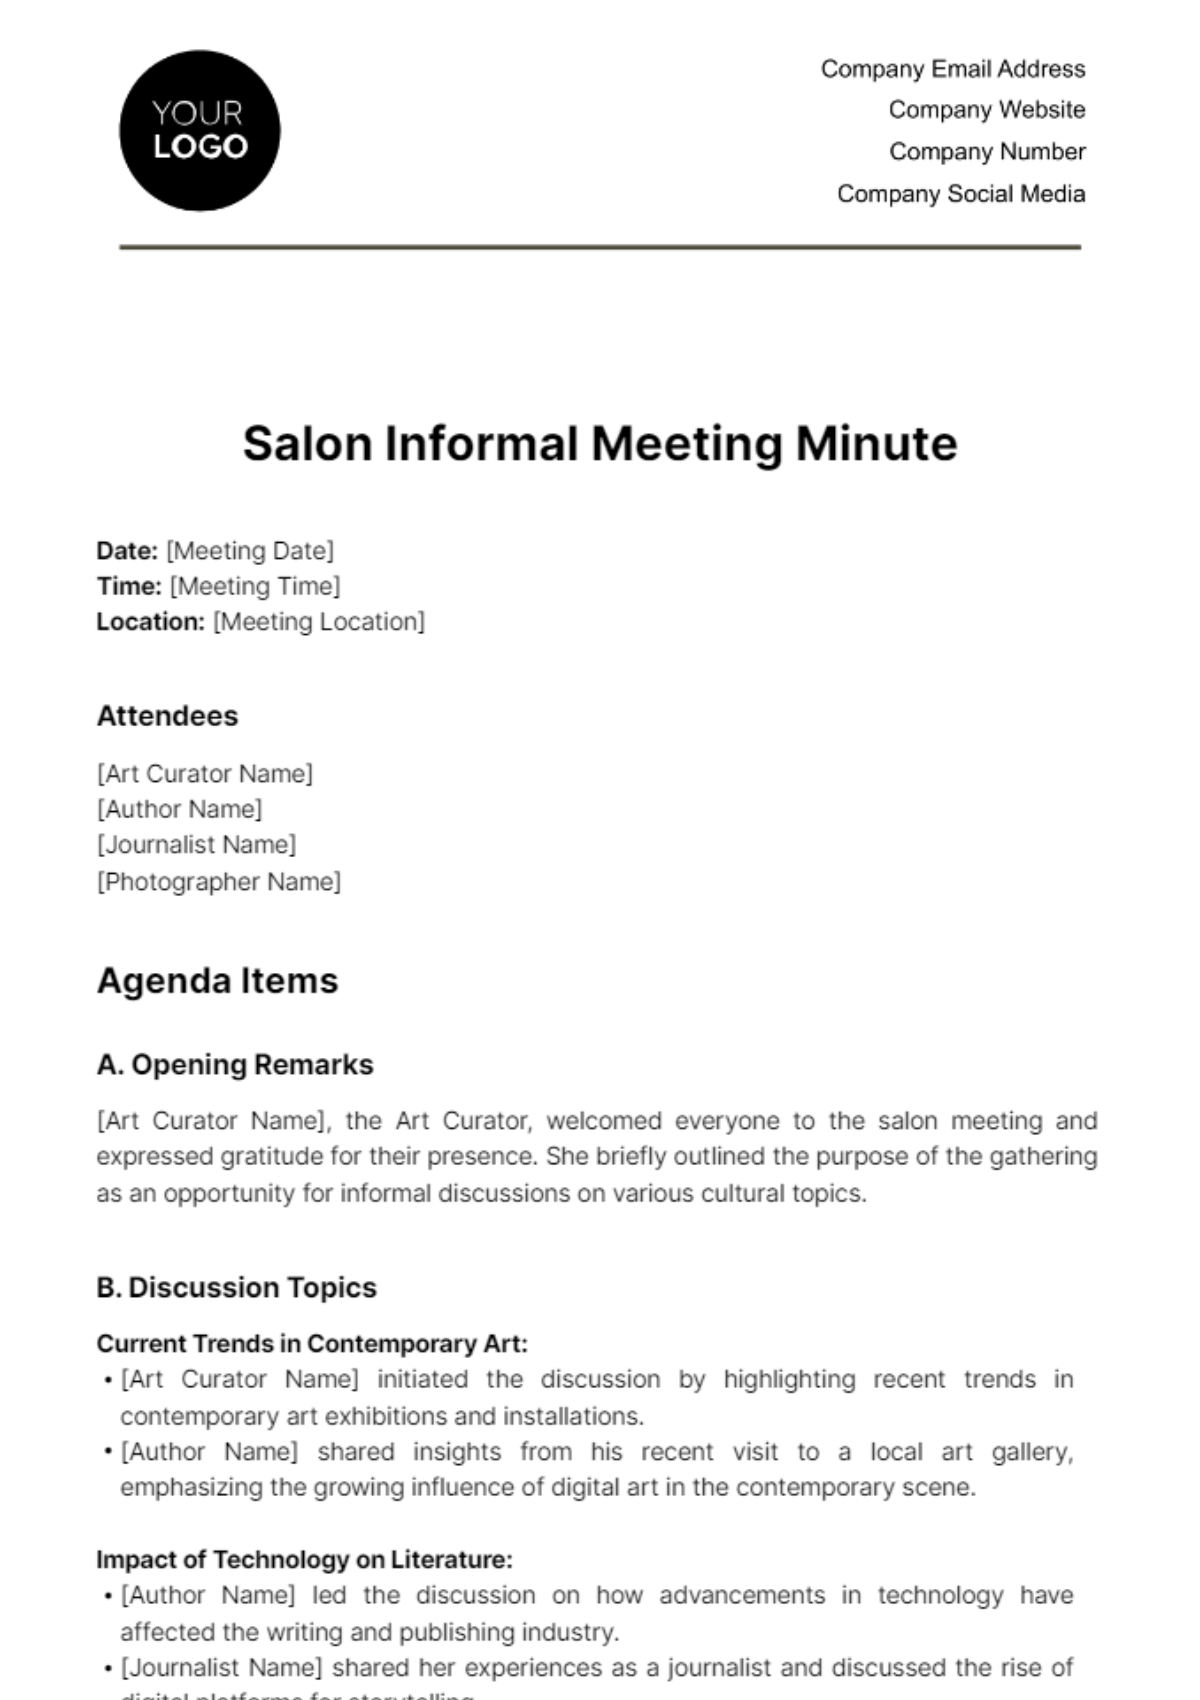 Free Salon Informal Meeting Minute Template